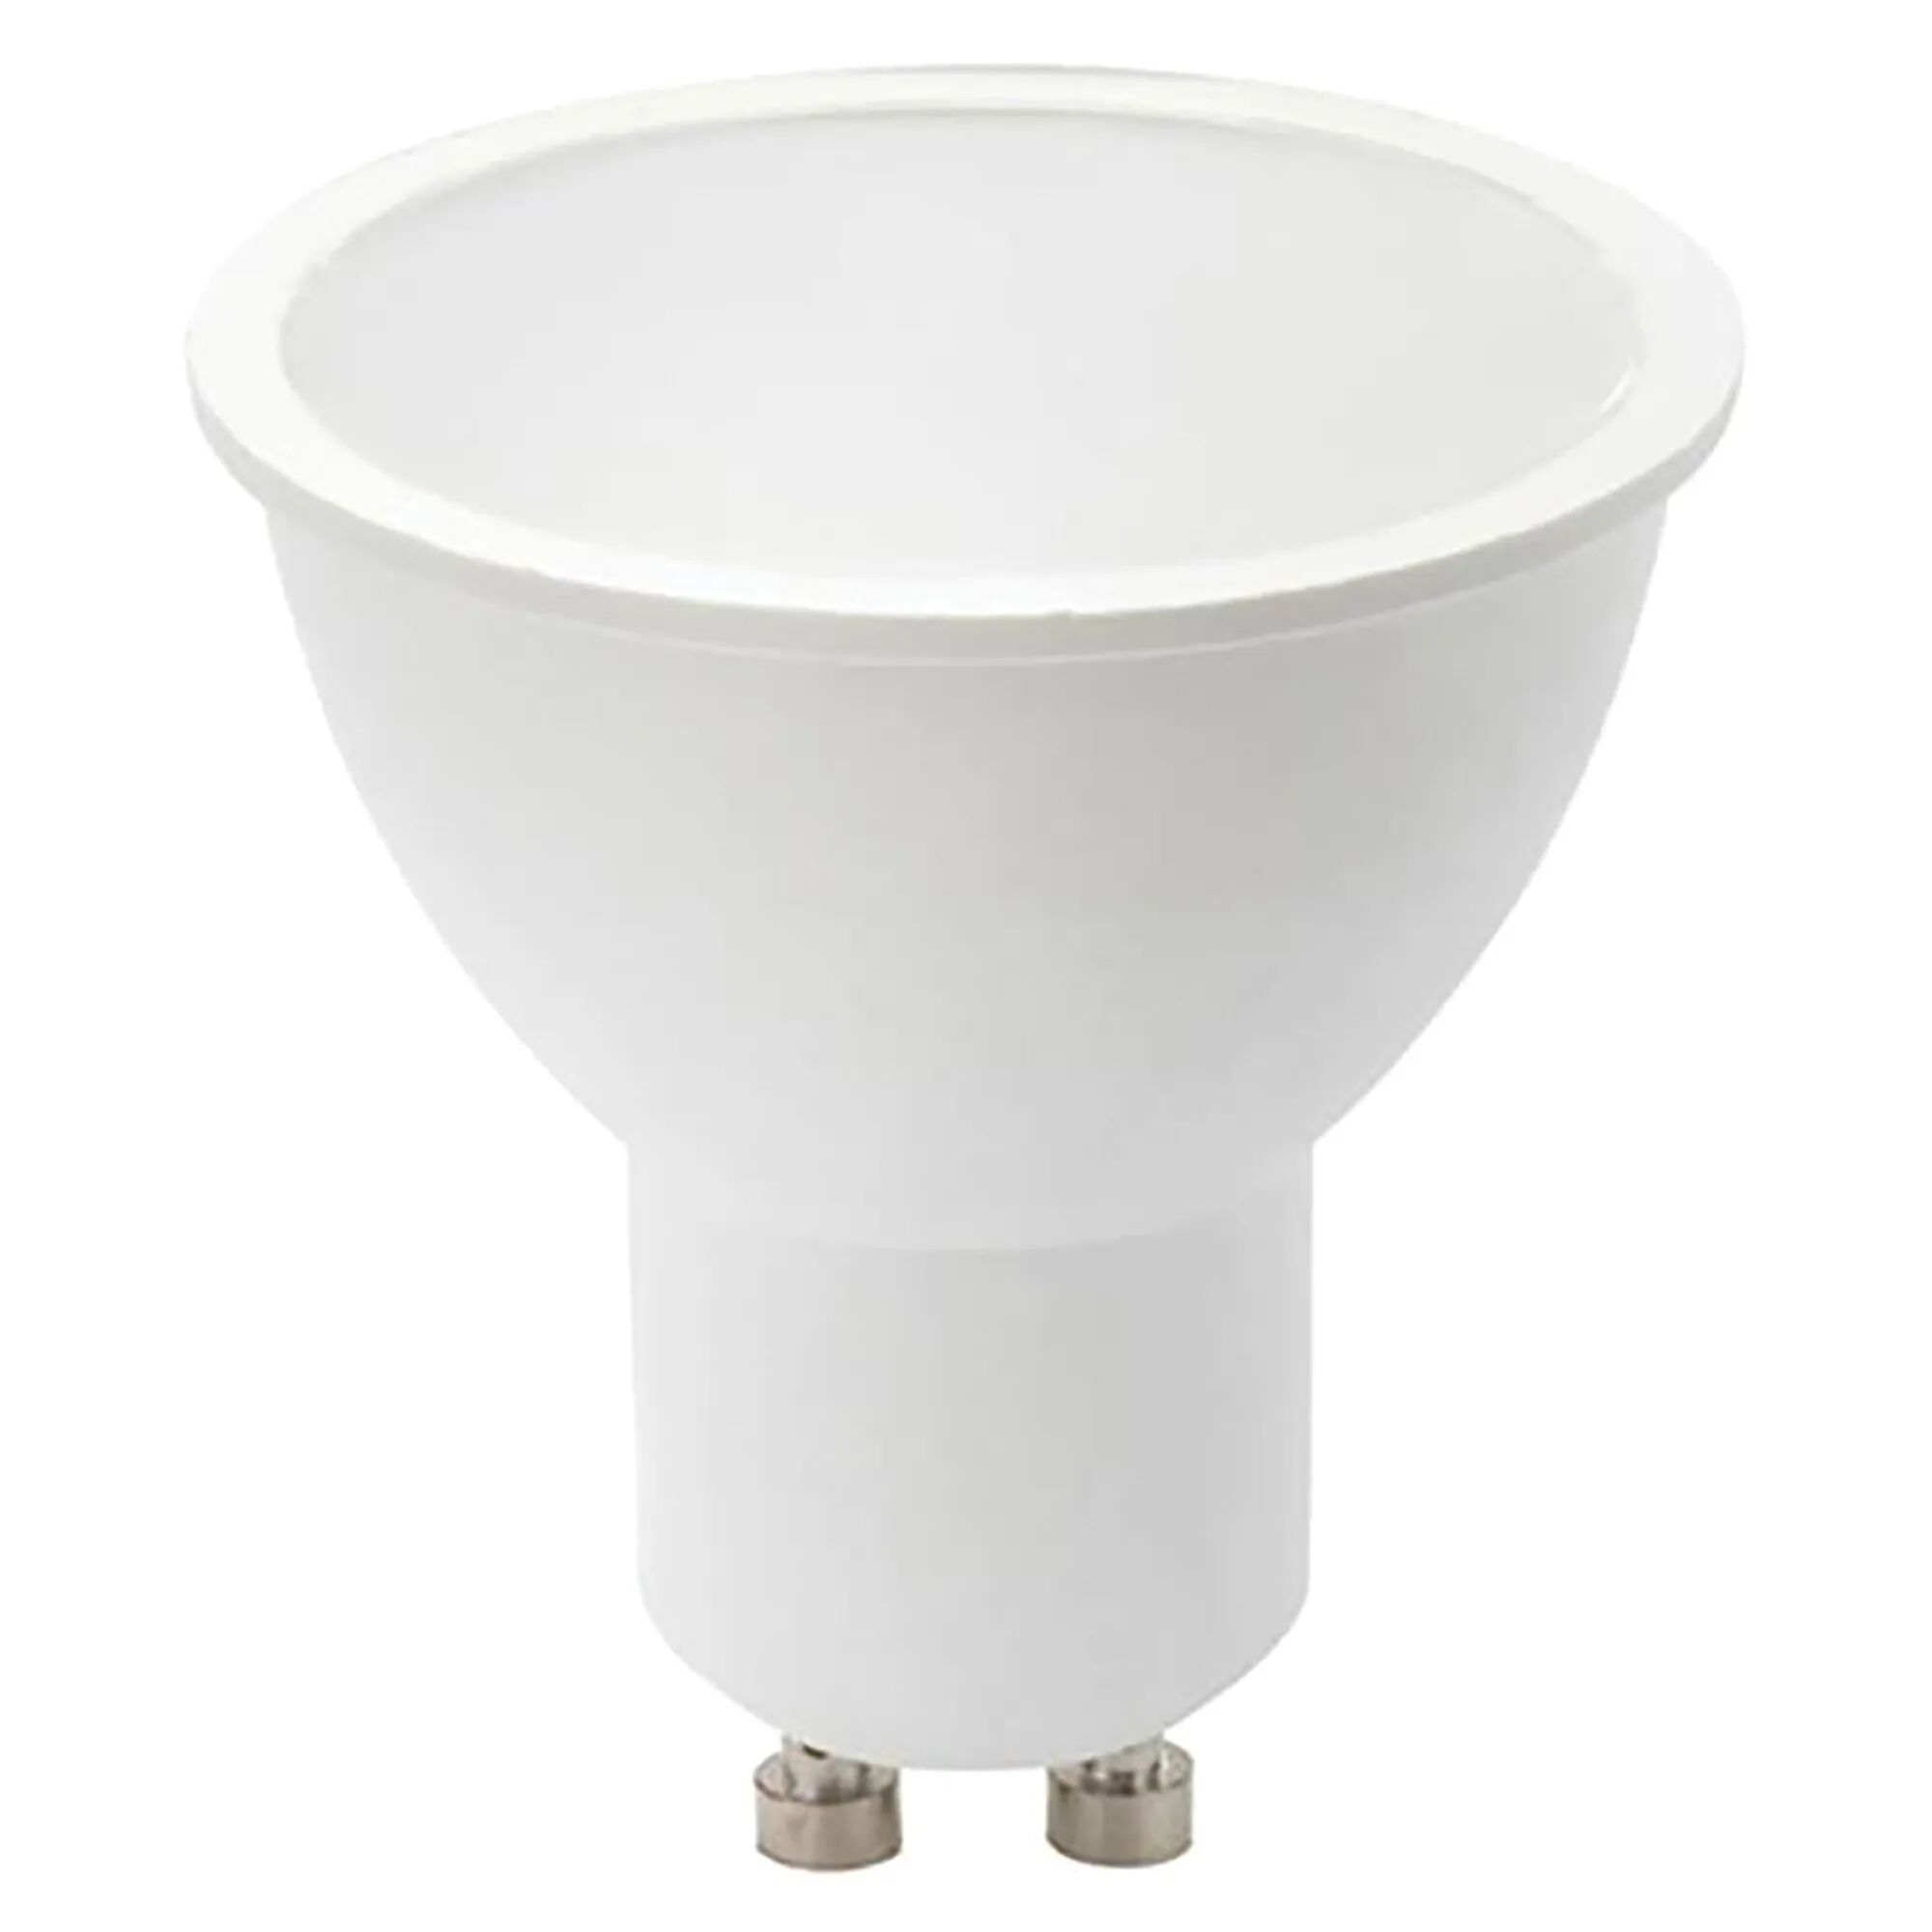 Suprema LAMPADINA LED  WI-FI GU10 5,5W = 50W 450 lumen RGB 2700K-6500K DIMMERABILE